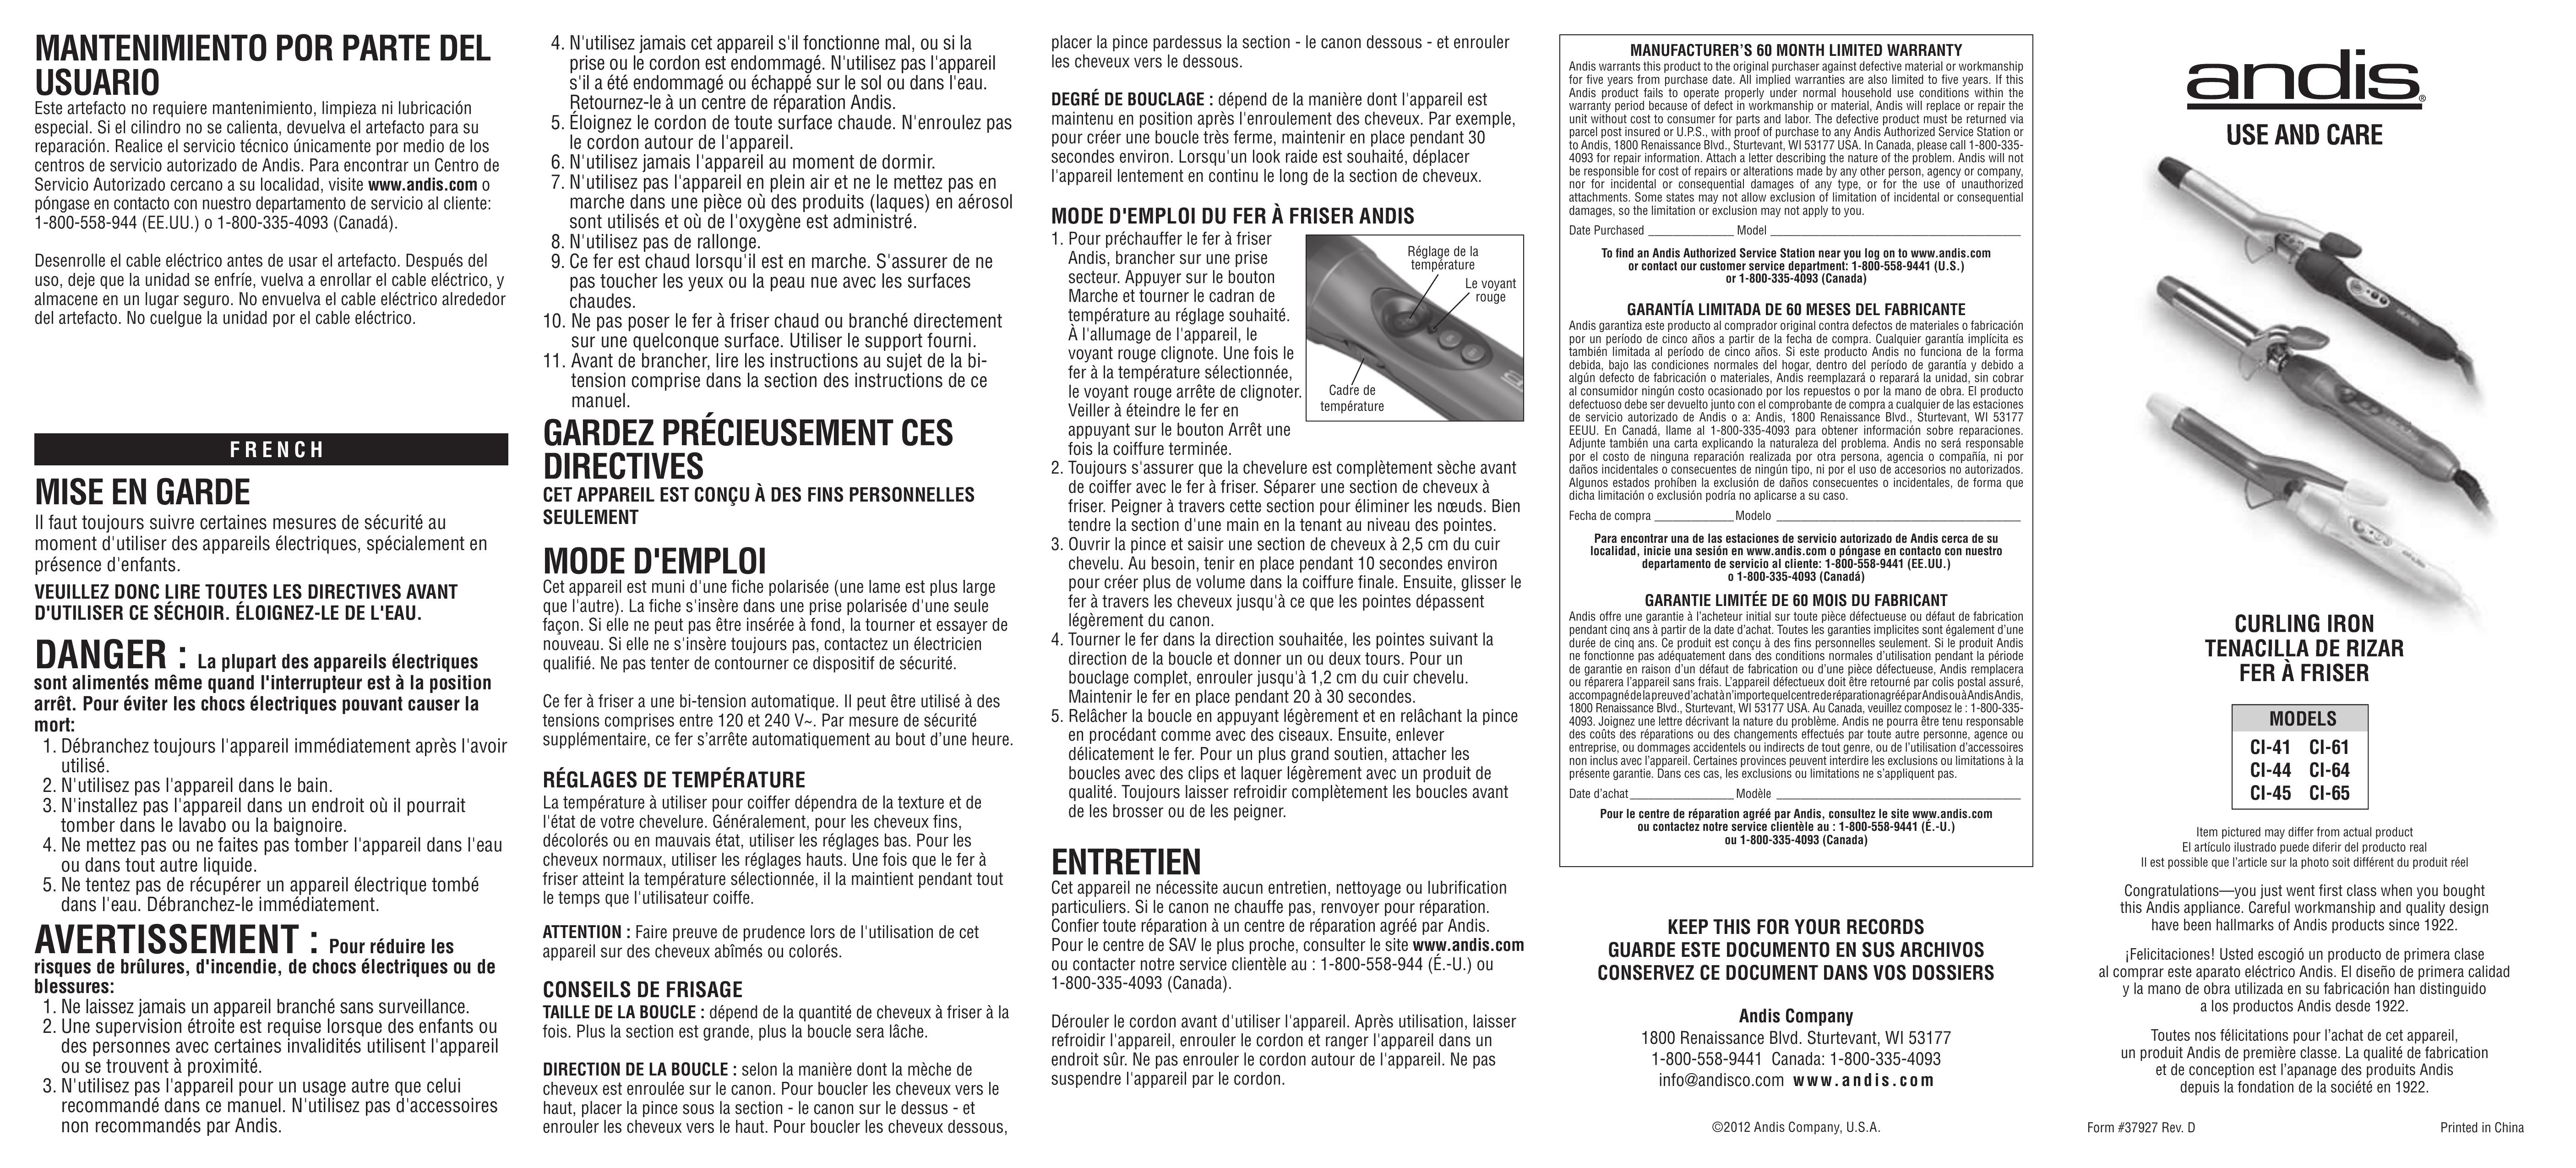 Andis Company CI-41 Styling Iron User Manual